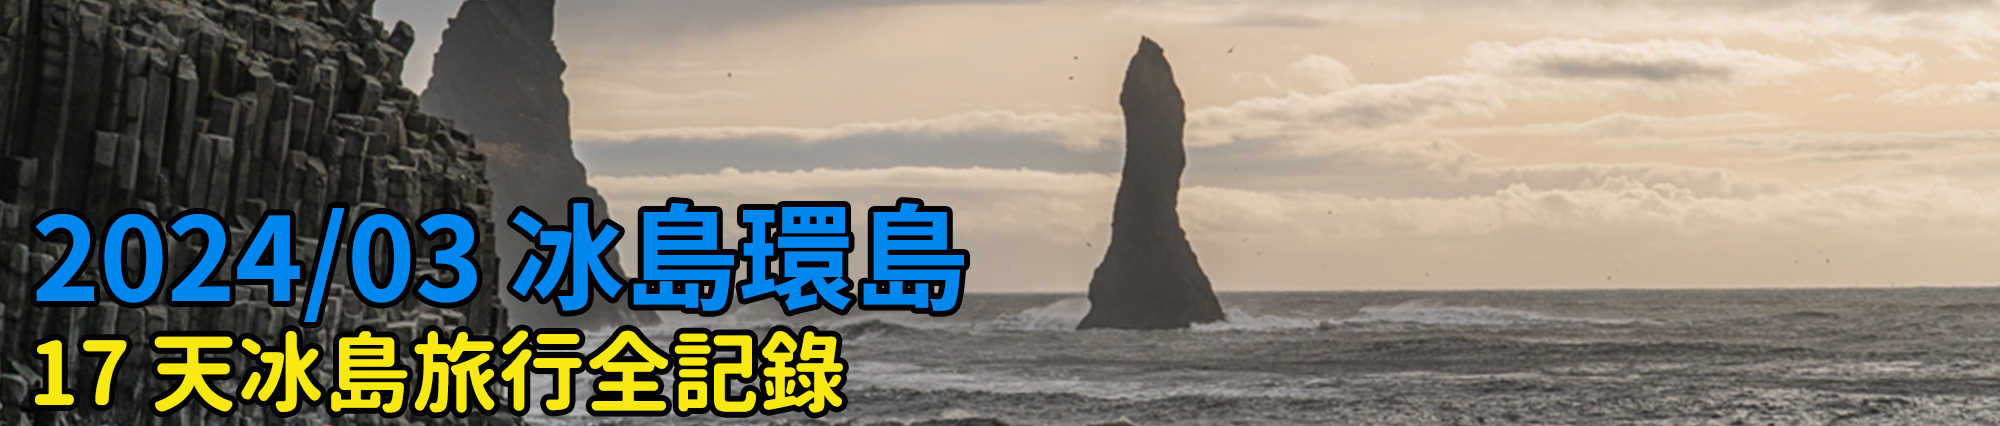 [2023 冰島環島 15 日] Day08 冰島巨石陣 Artic Henge 與黛提瀑布 Dettifoss